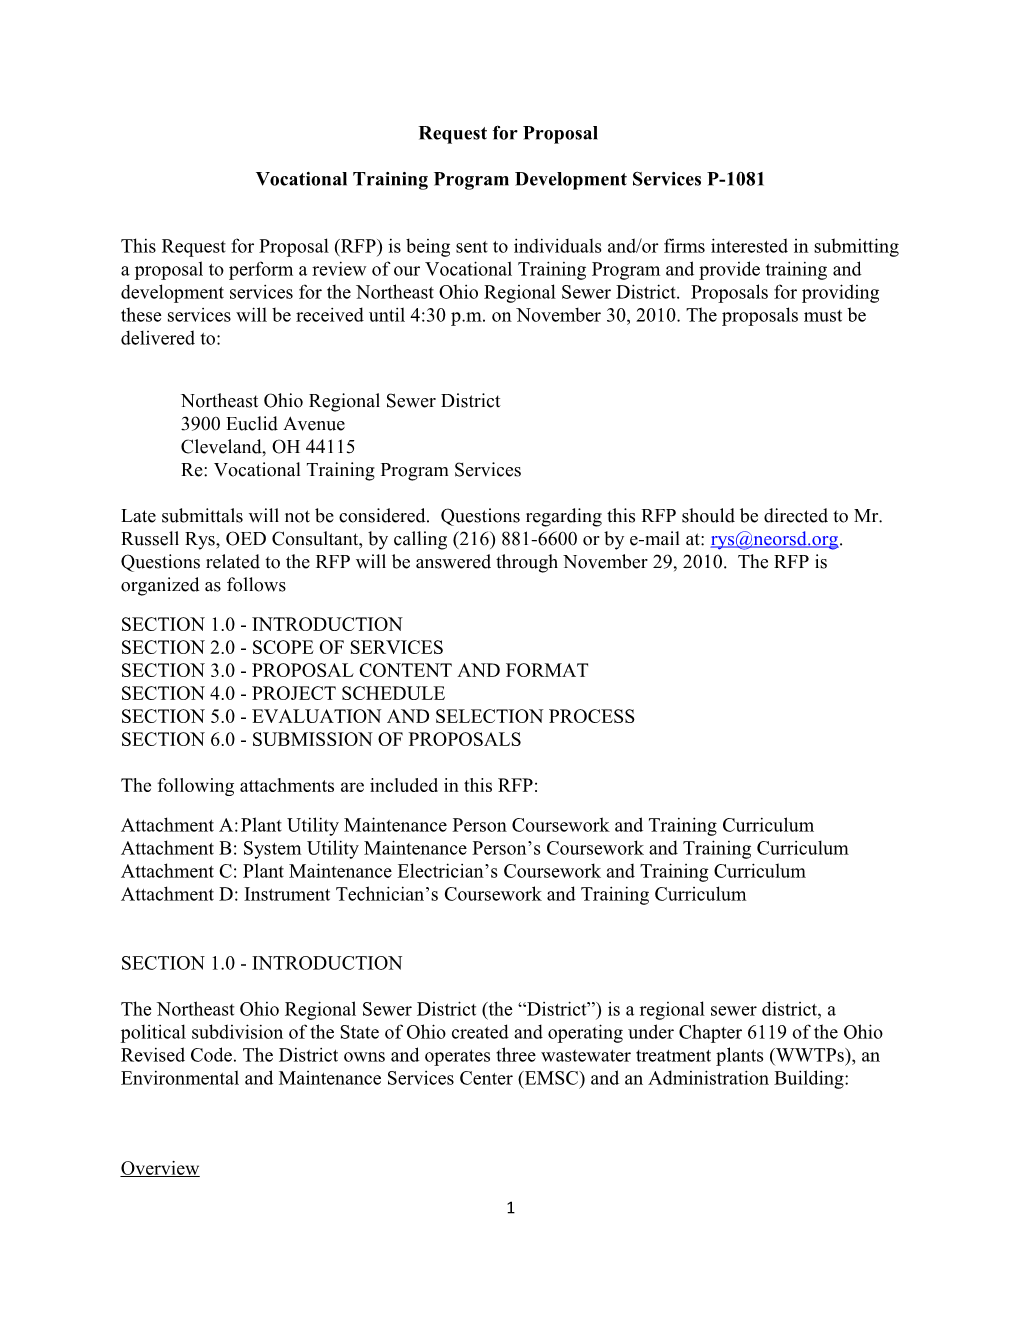 Vocational Training Program Development Services P-1081